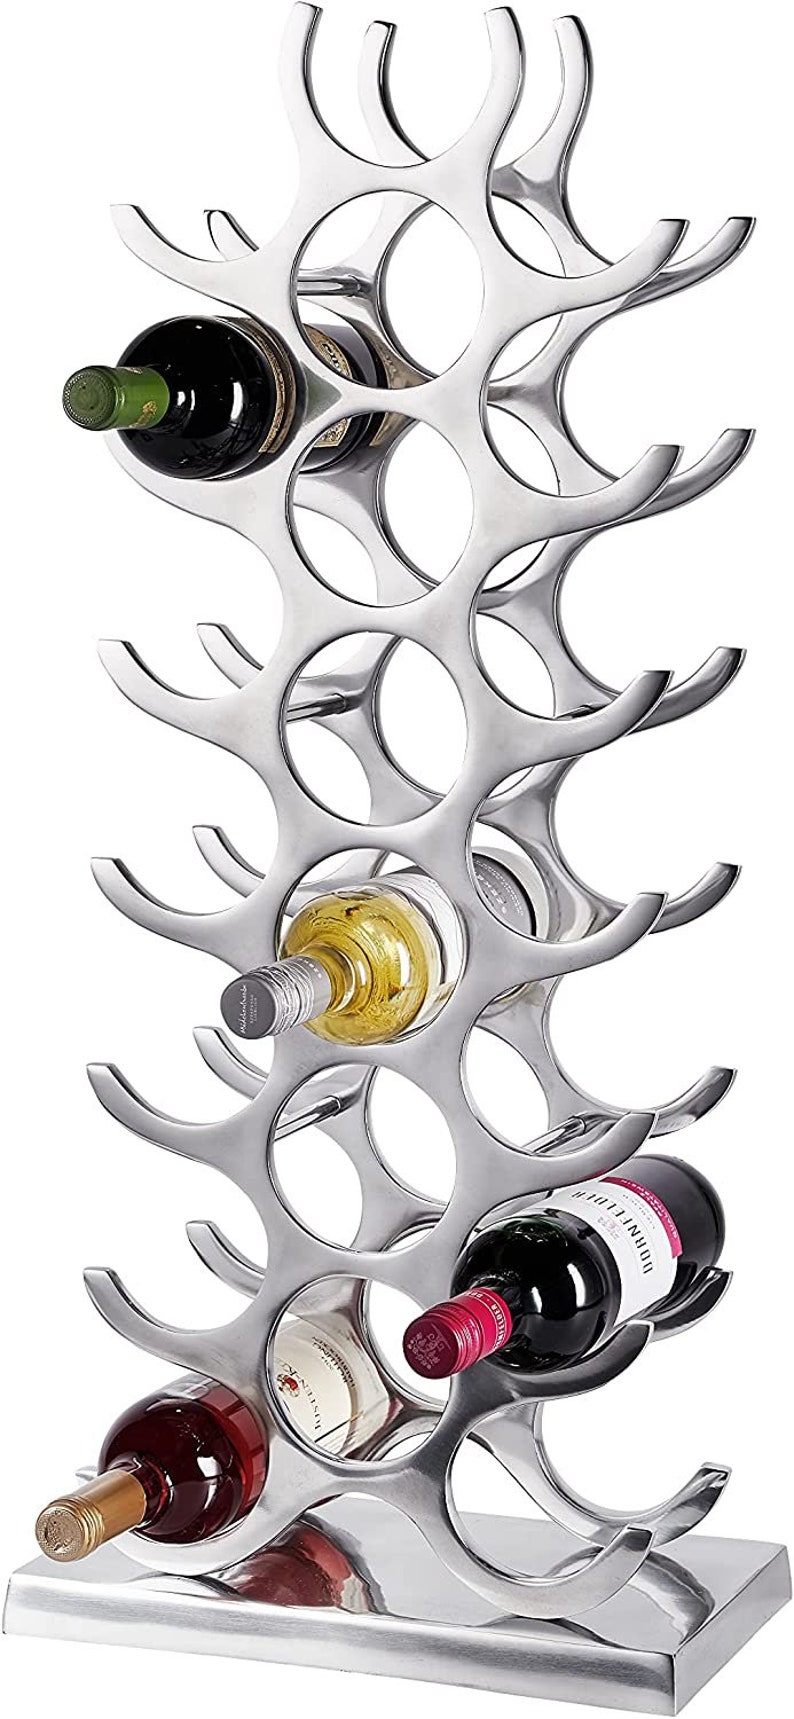 Botellero botellero botellero aluminio metal plateado soporte para vino, estante metálico moderno portabotellas/vino y champán 78 cm imagen 6